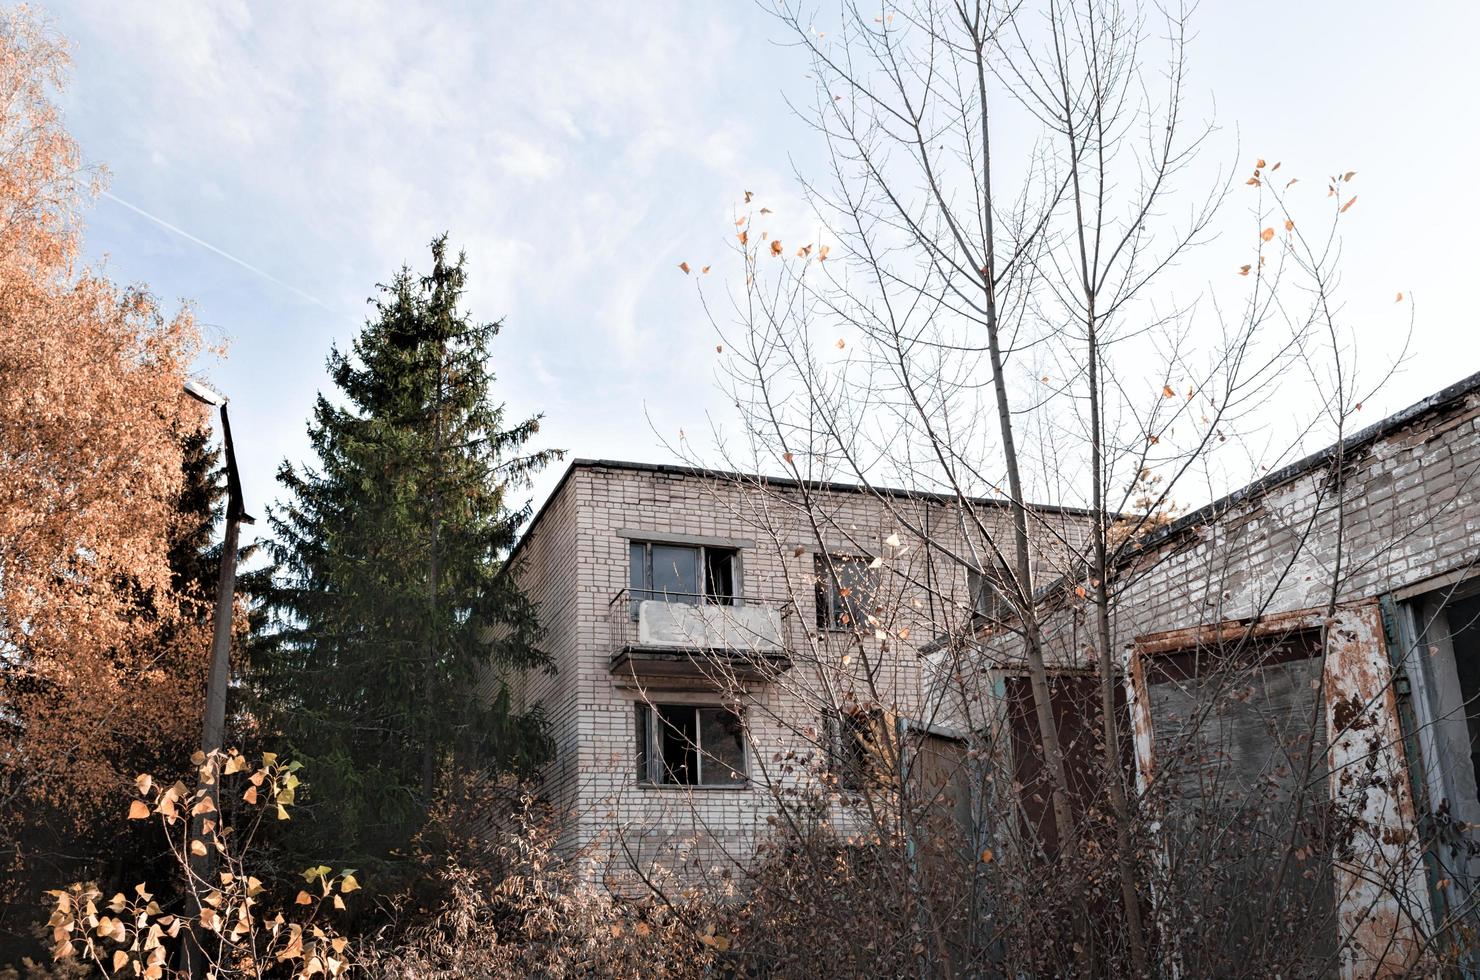 pripyat, Ukraina, 2021 - gammalt hus i Tjernobyl foto